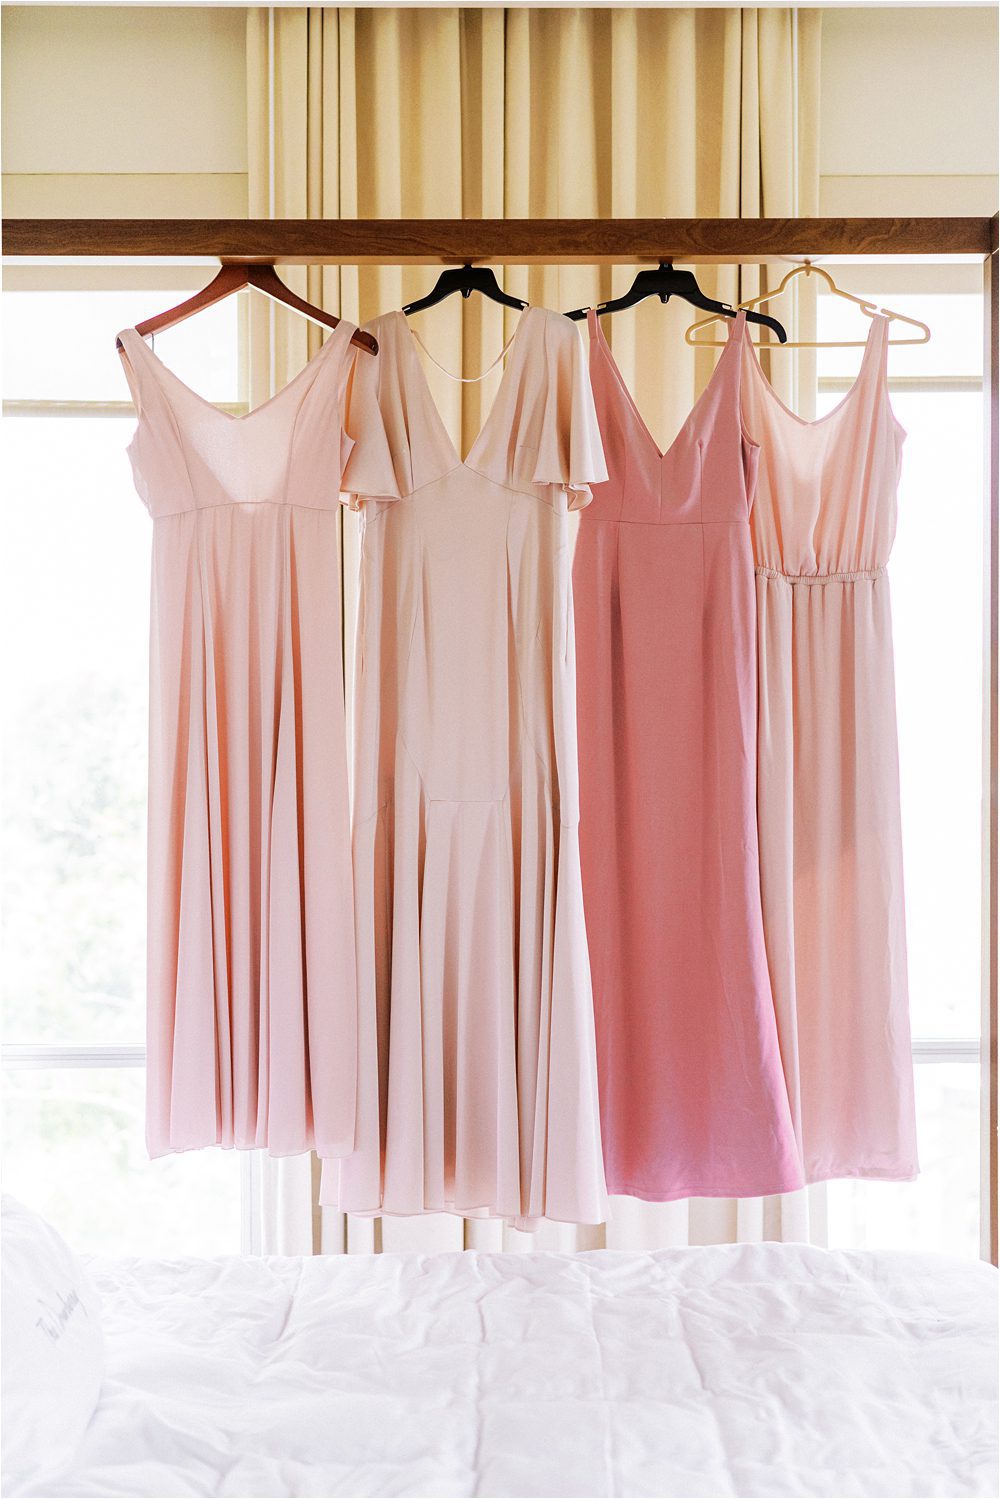 mix matched pink bridesmaids dresses